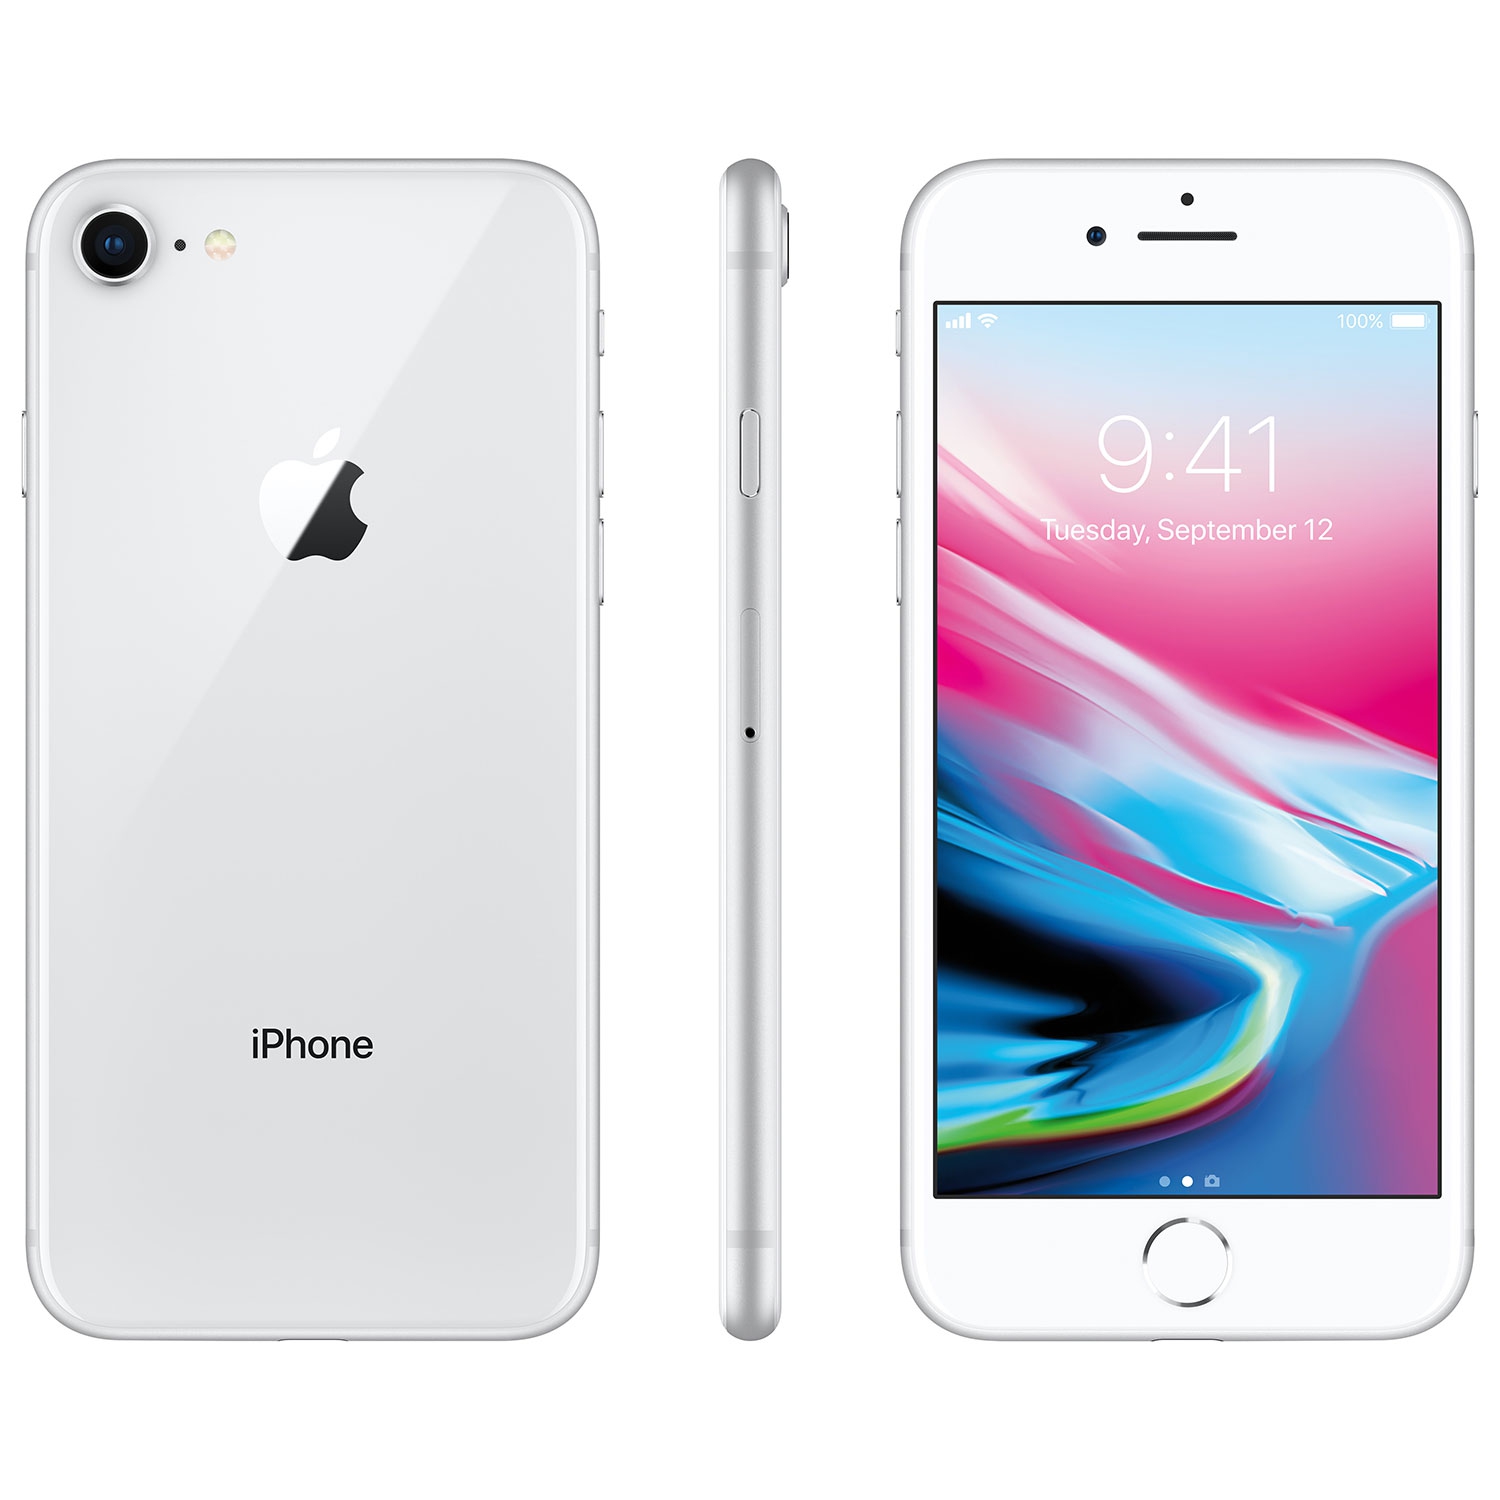 Apple iPhone 8 64GB Smartphone - Silver - Unlocked - Open Box